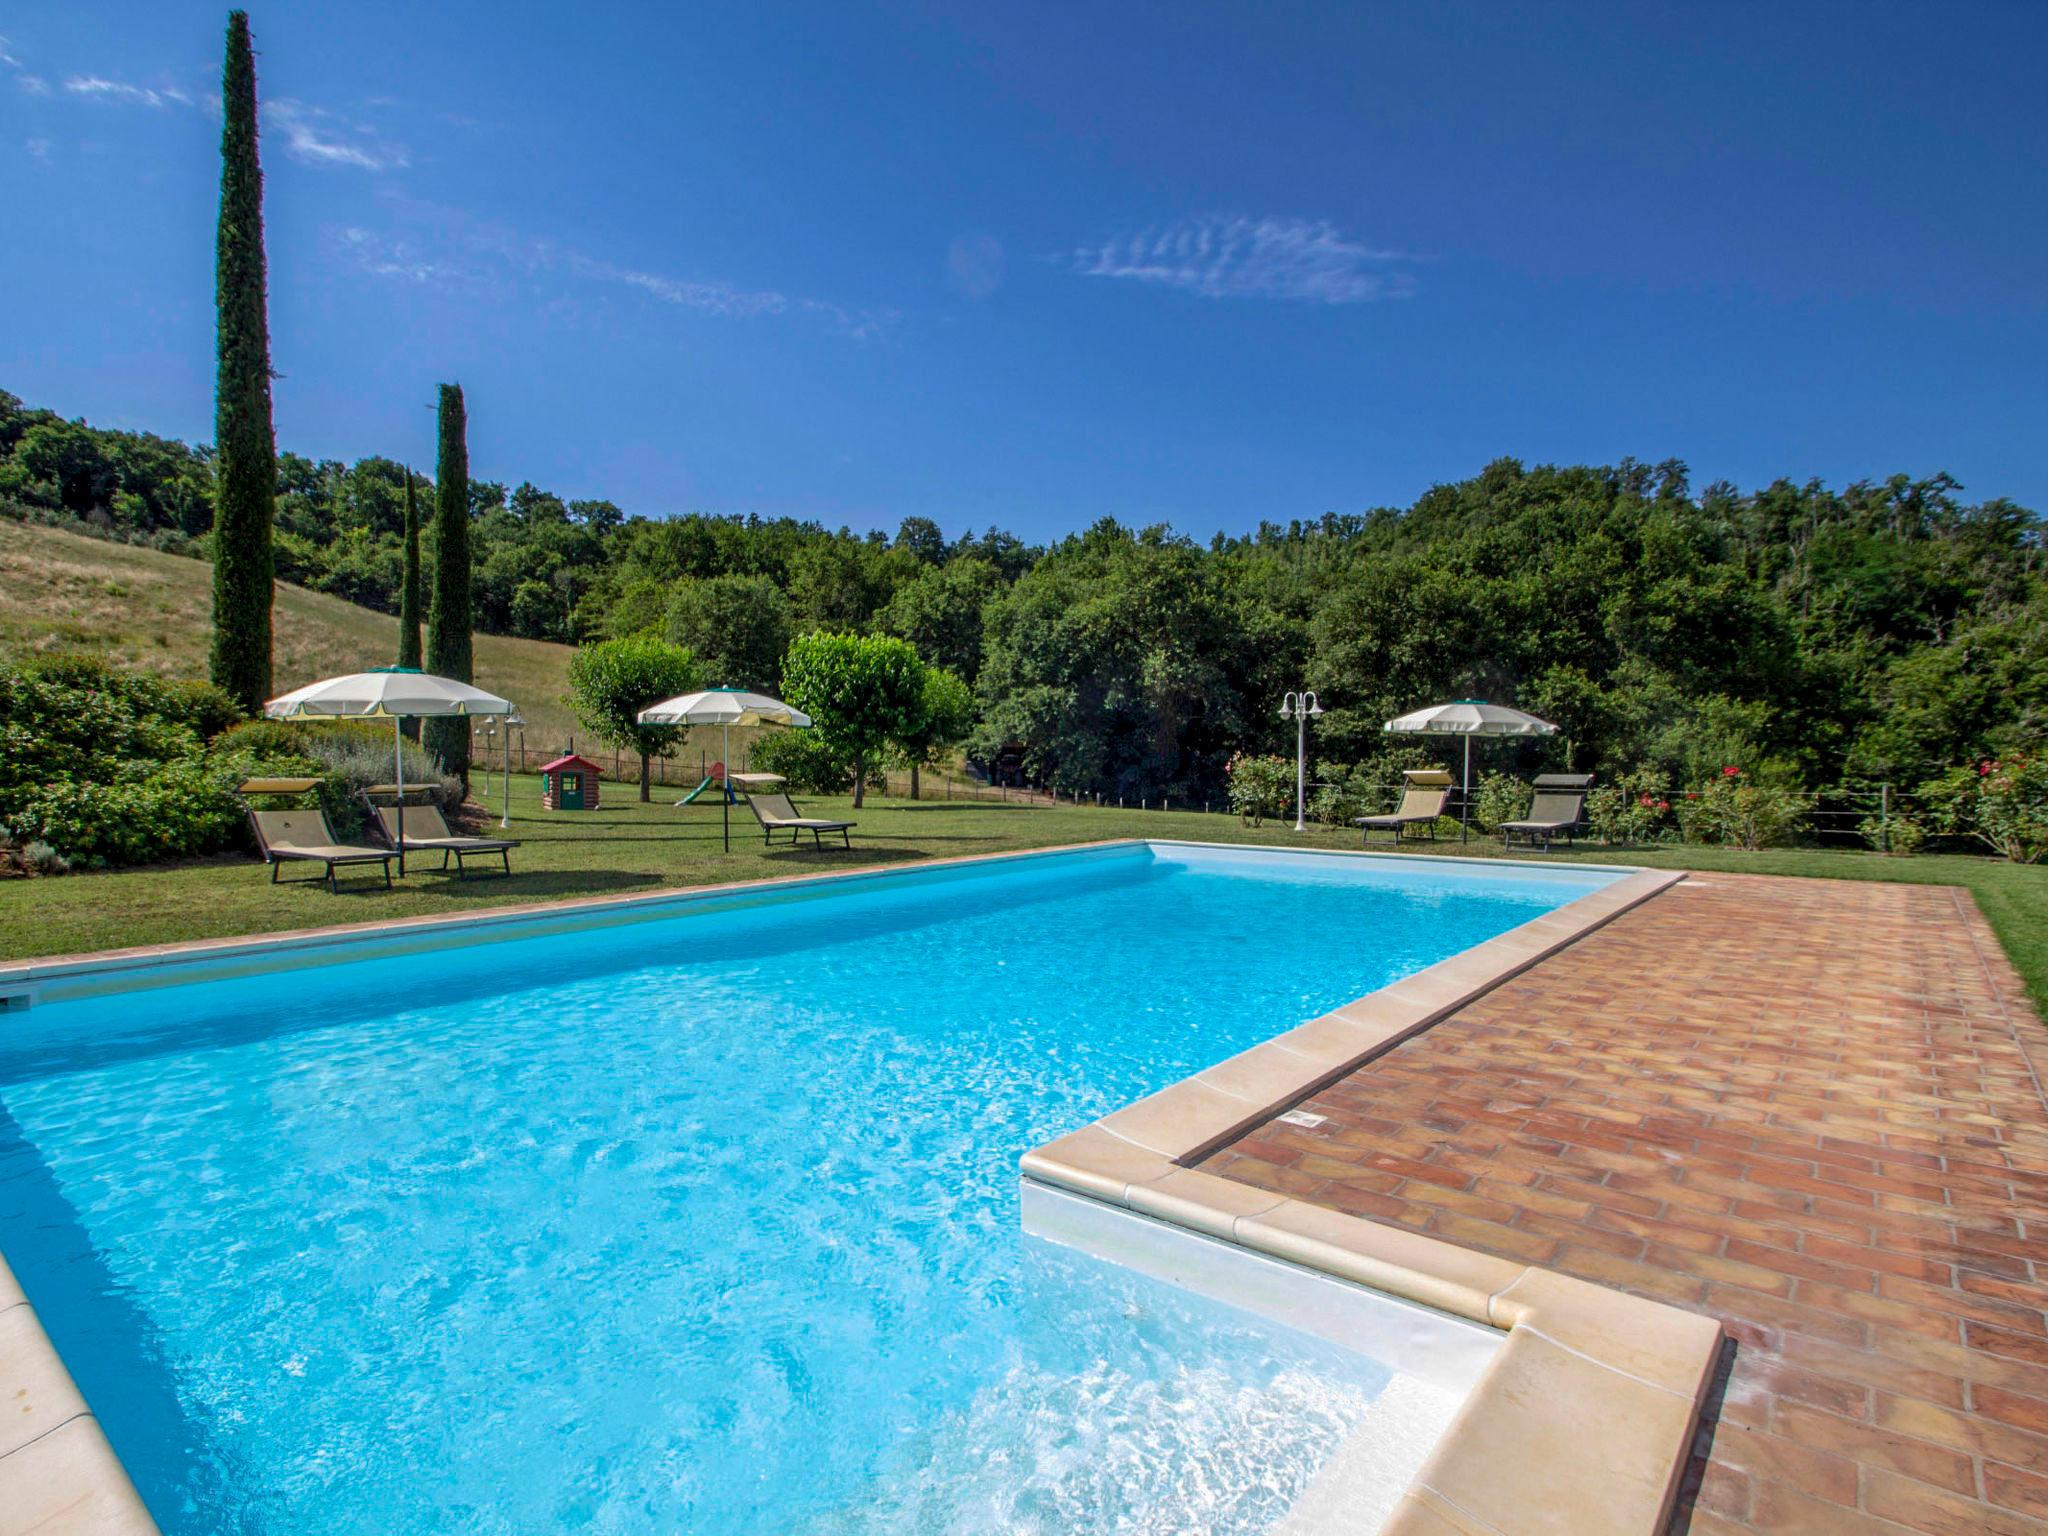 Photo 2 - Appartement de 2 chambres à San Giovanni Valdarno avec piscine et terrasse